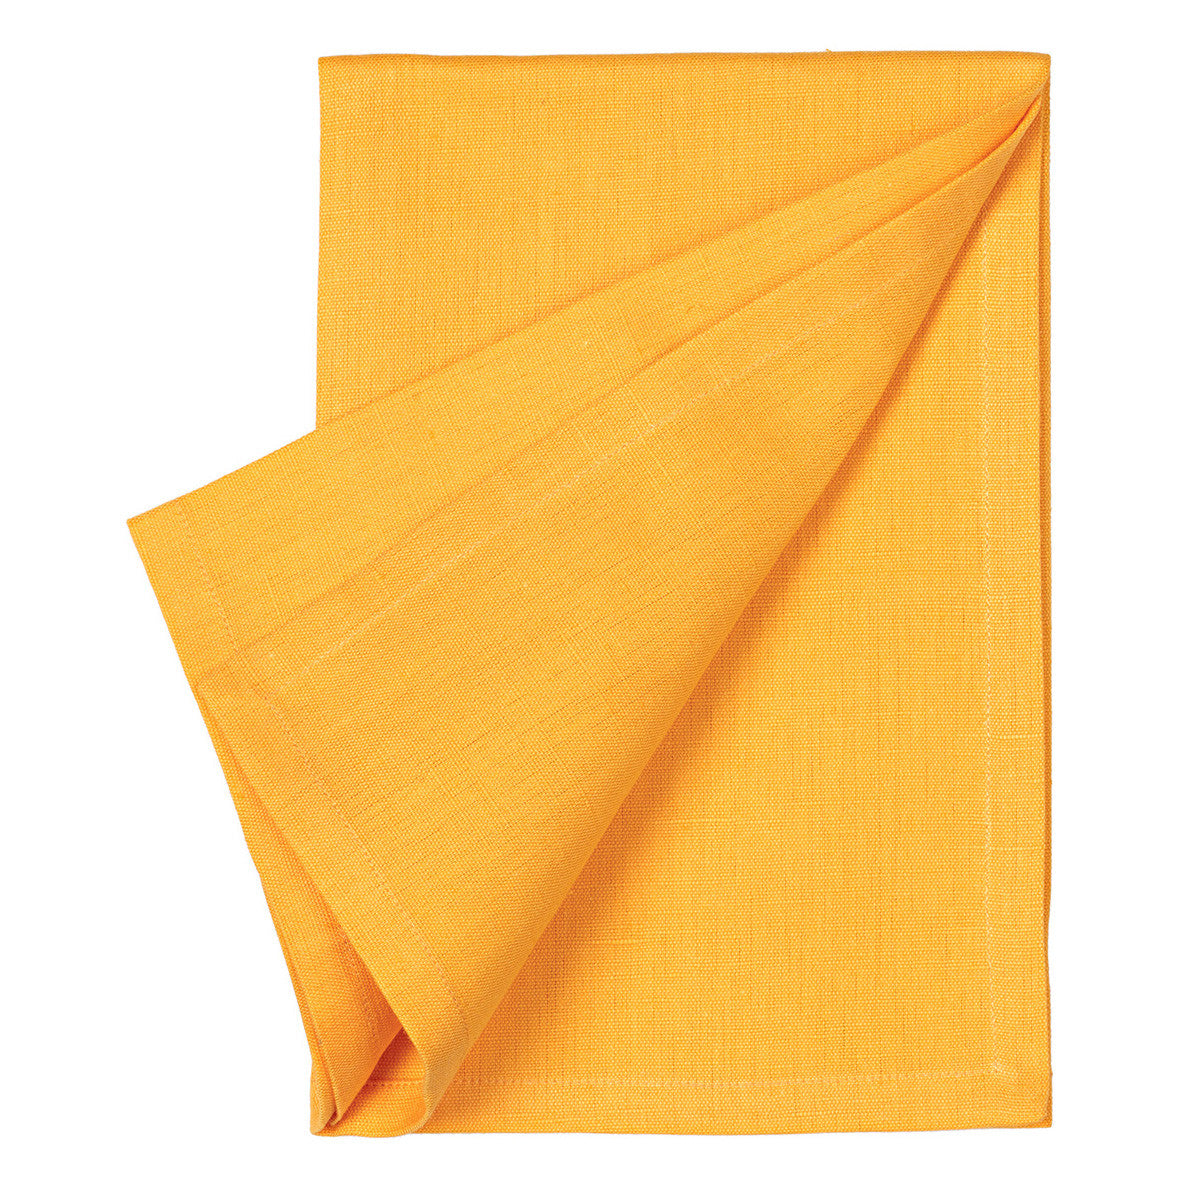 Cotton Linen Union Napkins in Saffron Yellow